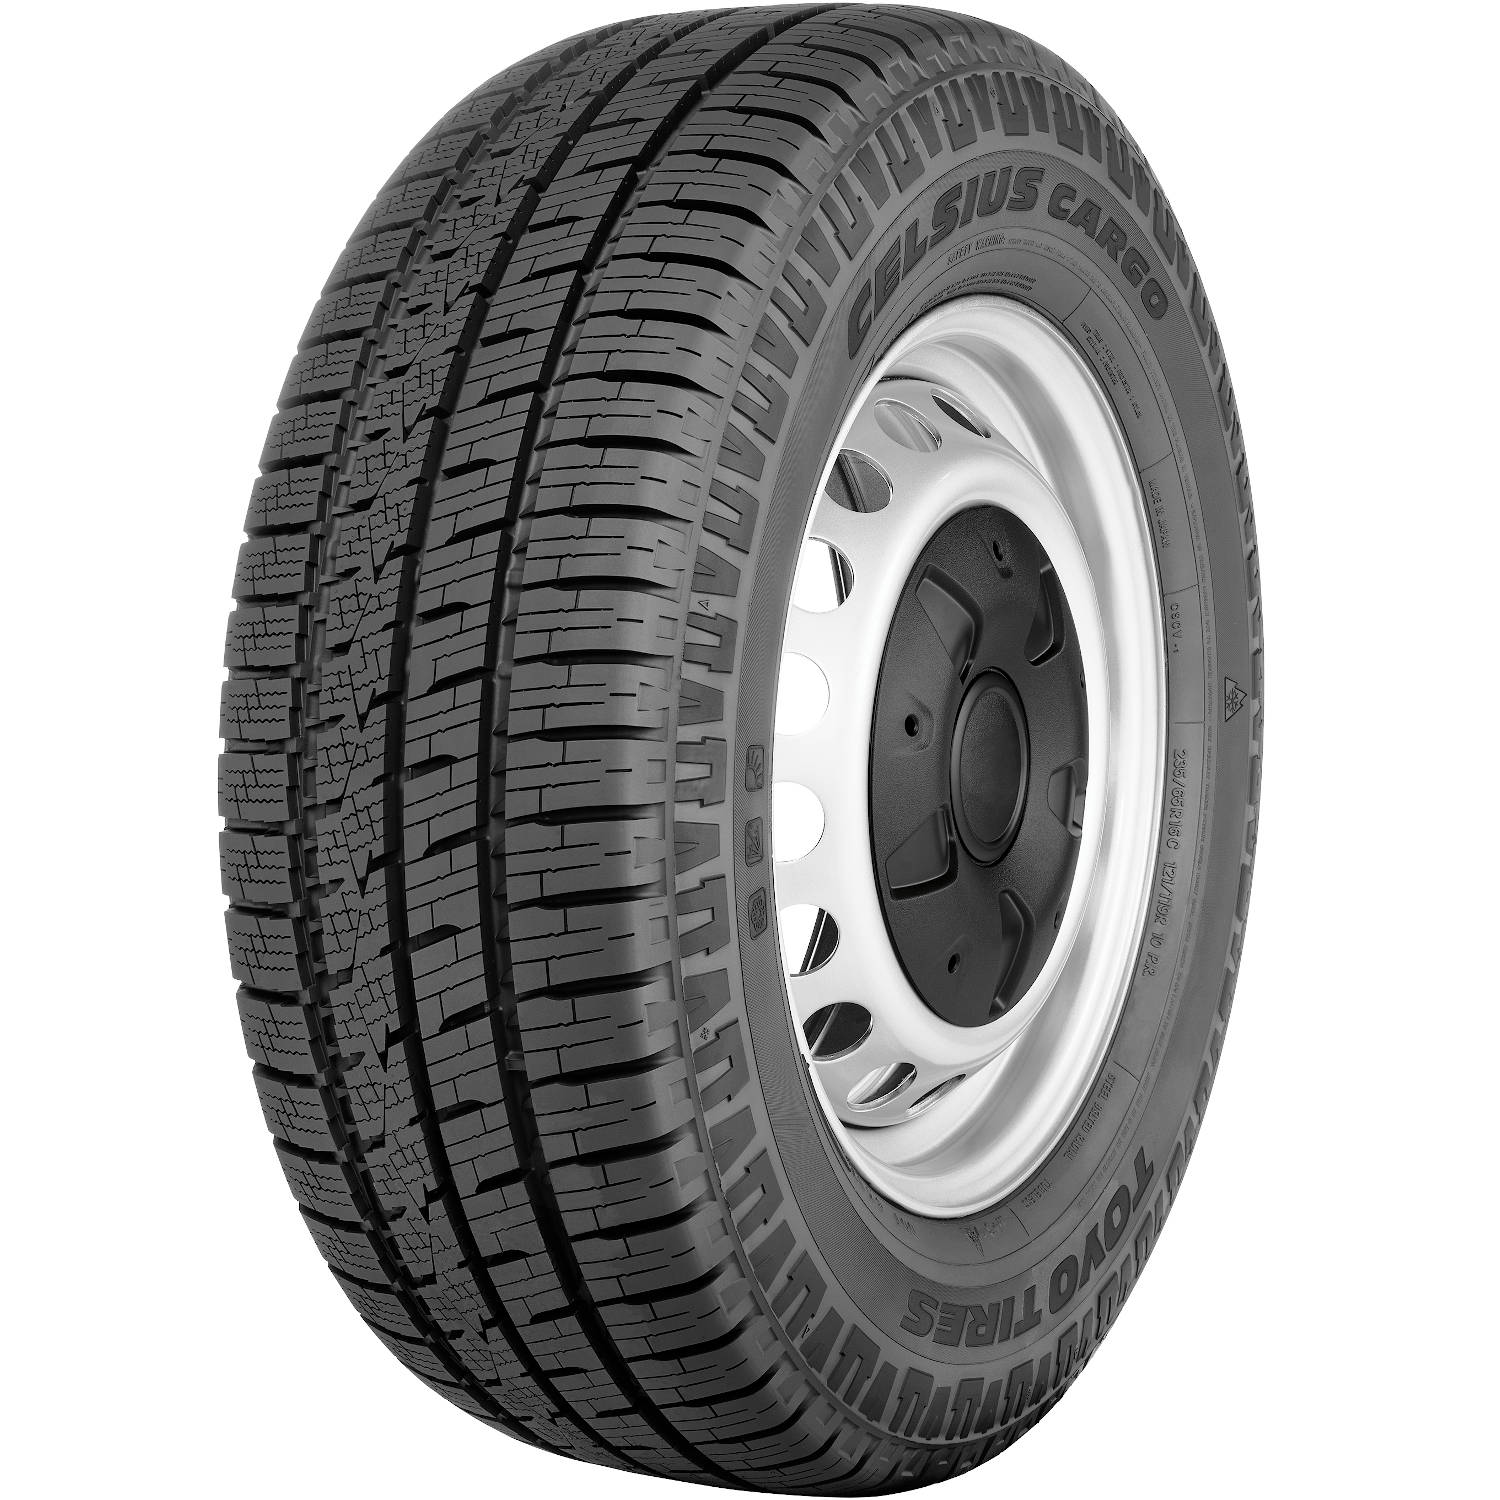 TOYO TIRES CELSIUS CARGO 205/75R16 (28.1X8.1R 16) Tires